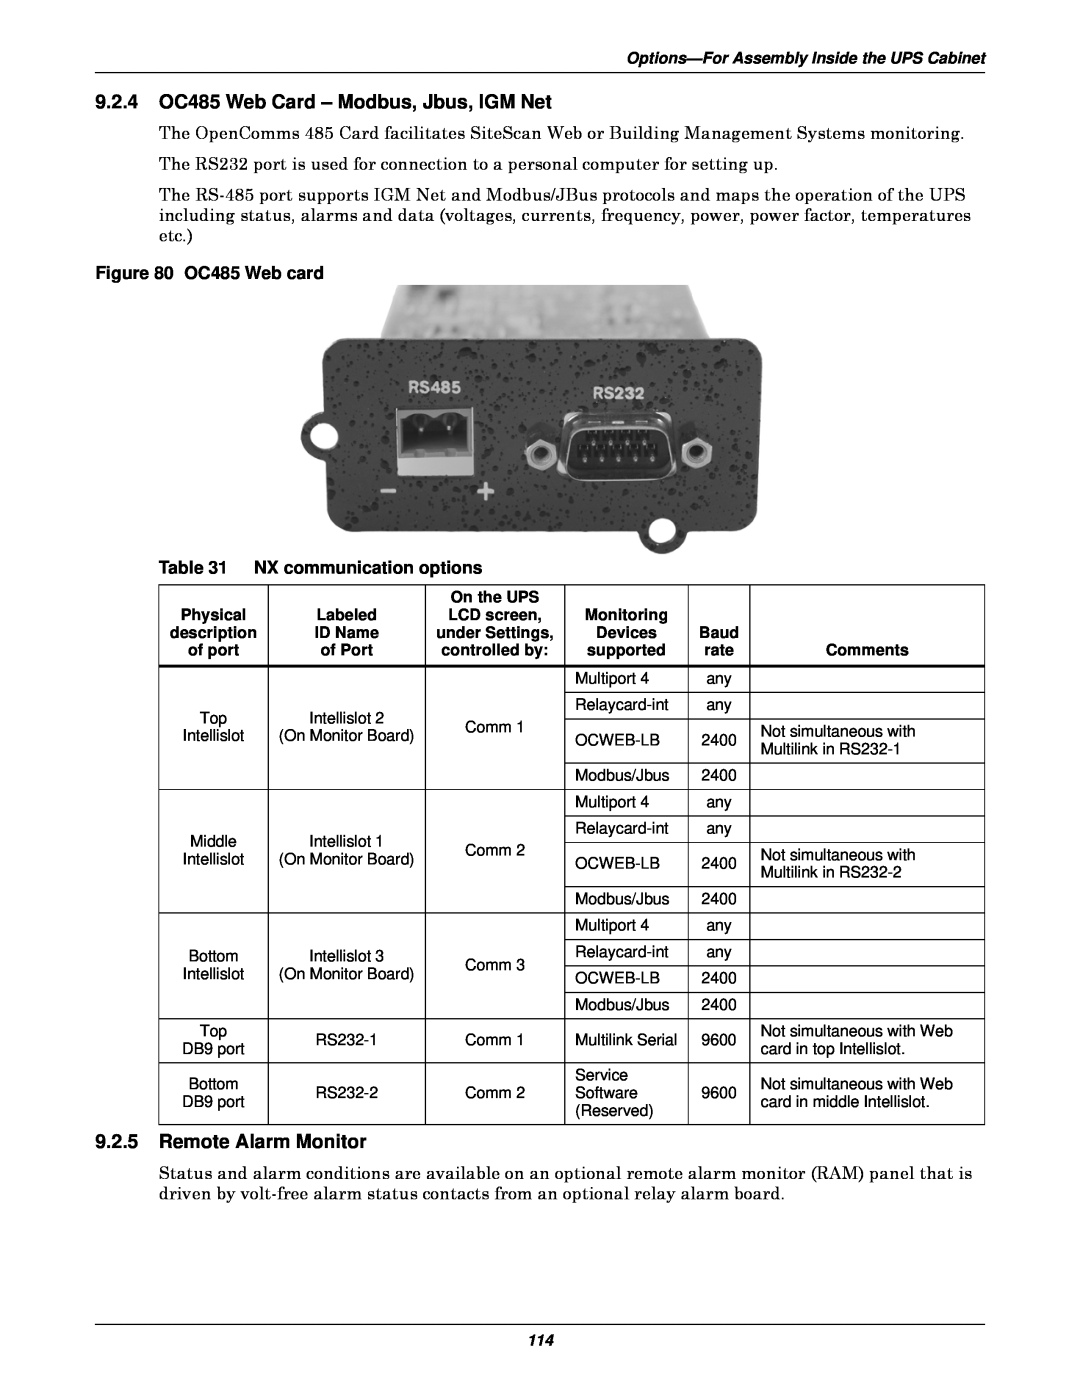 Emerson 50 and 60 Hz, 400V, 30-200kVA user manual 9.2.4 OC485 Web Card - Modbus, Jbus, IGM Net, Remote Alarm Monitor 